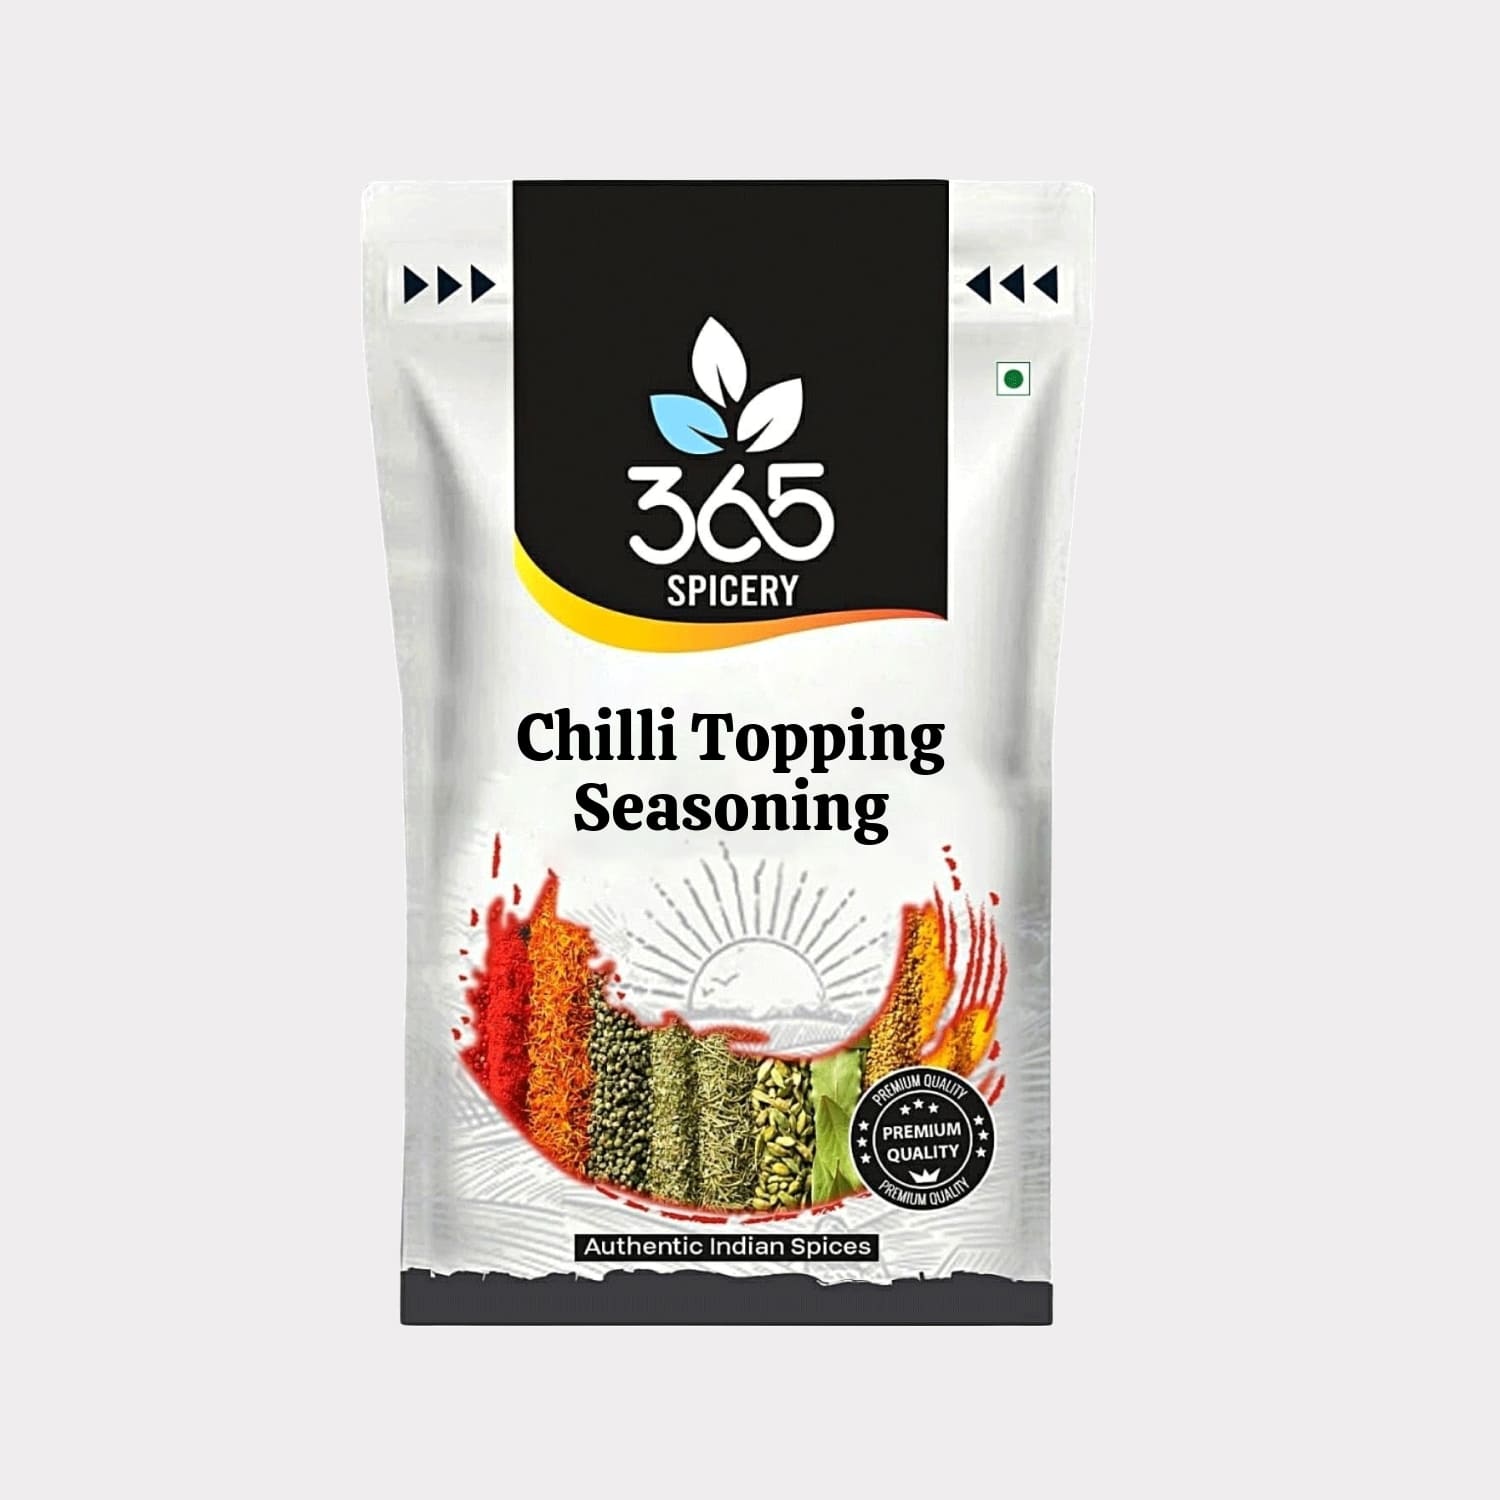 Chilli Topping Seasoning